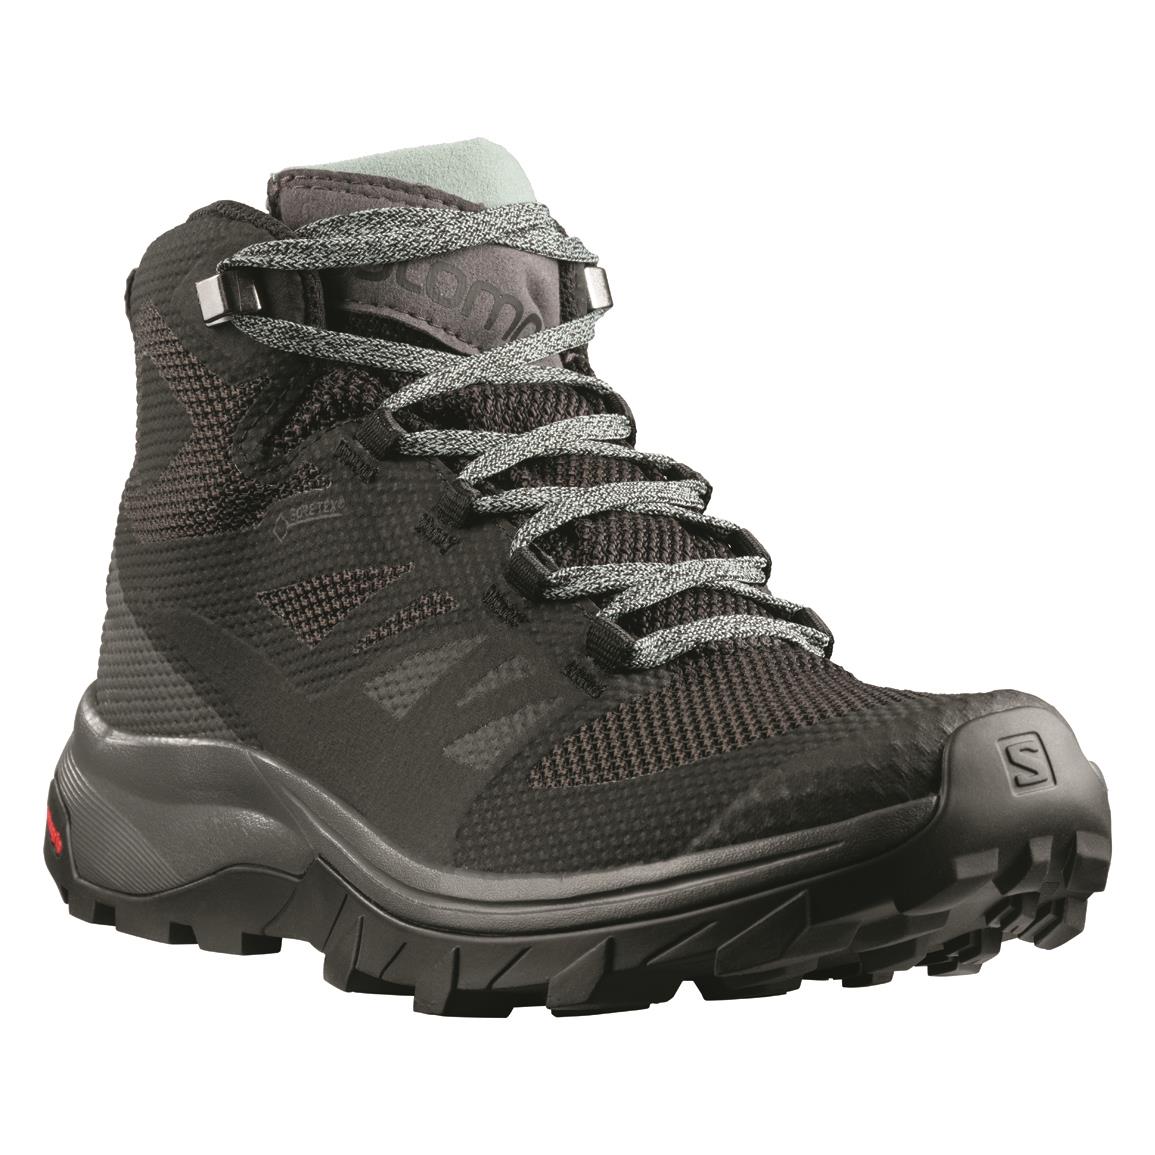 Salomon Women's OUTline GTX Waterproof Hiking Boots, GORE-TEX, Black/magnet/green Milieu